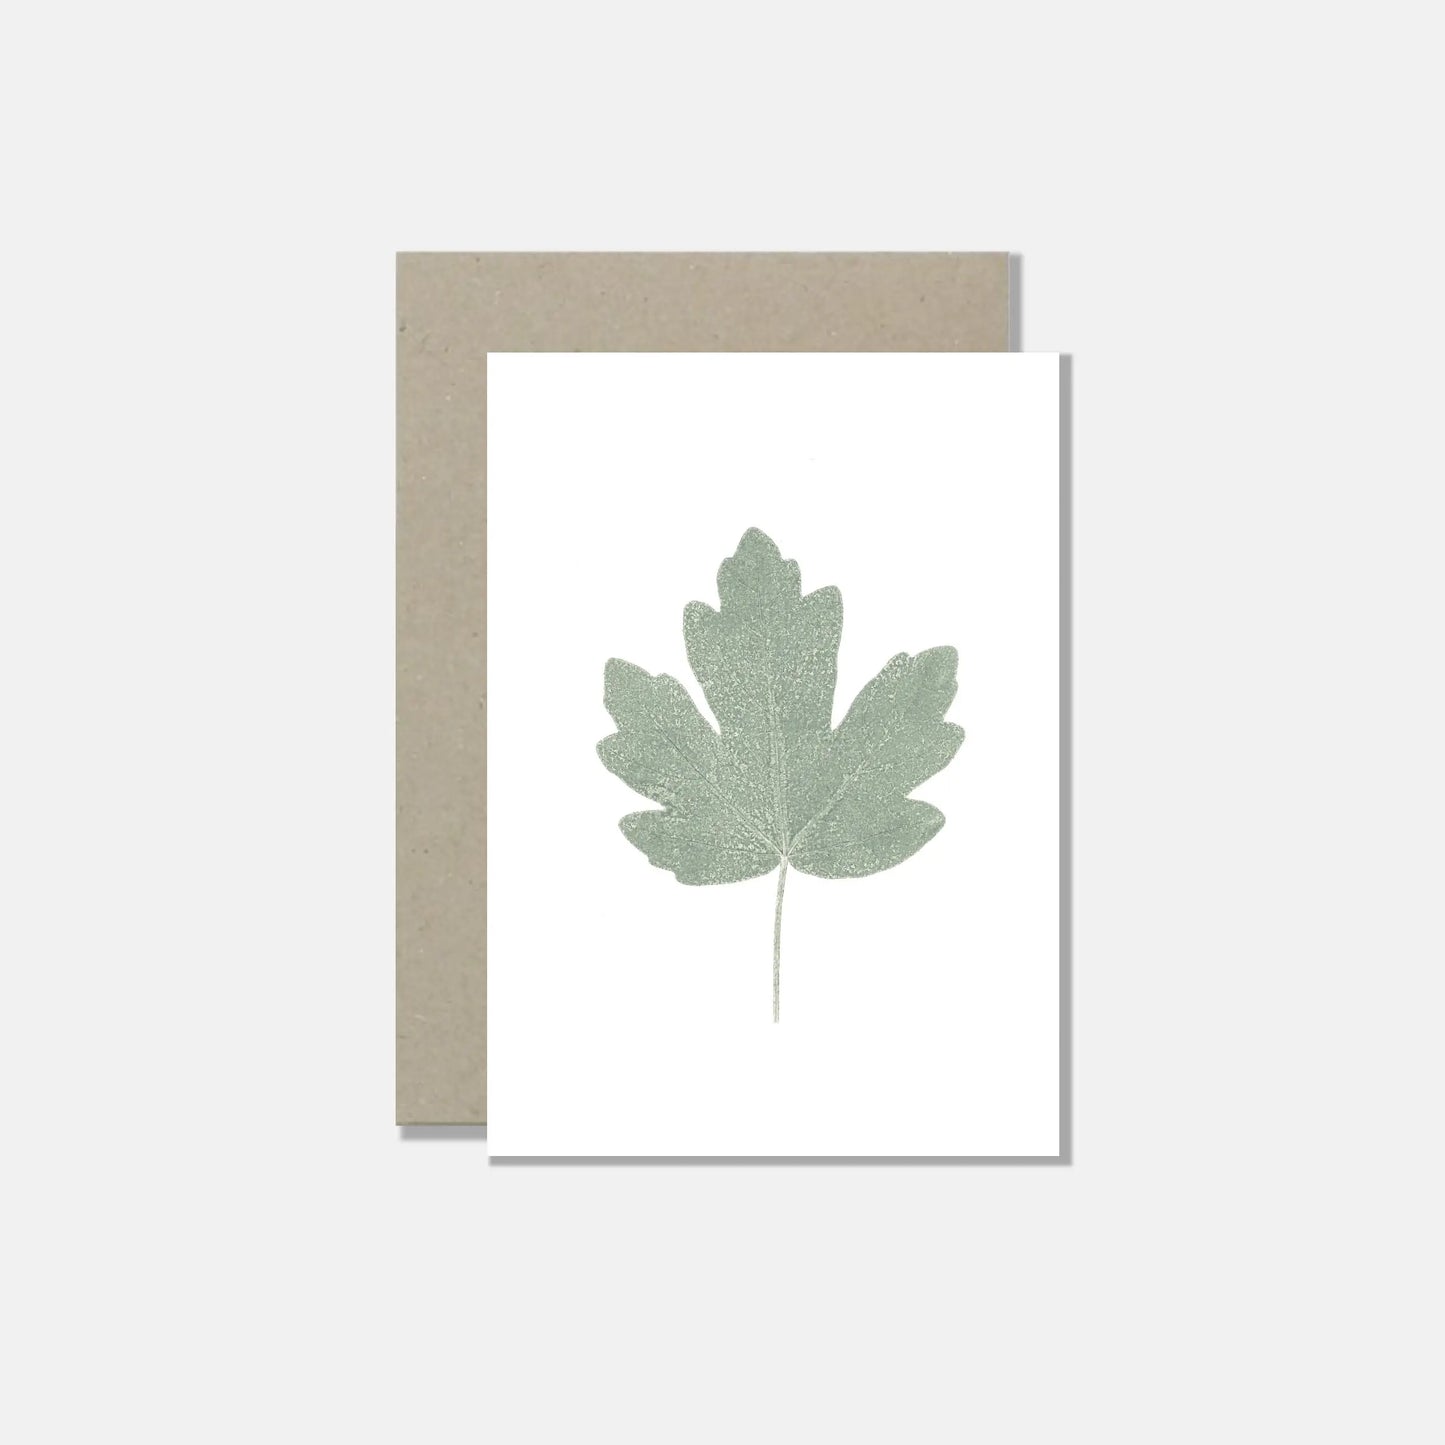 Green nature postcards - set of 5